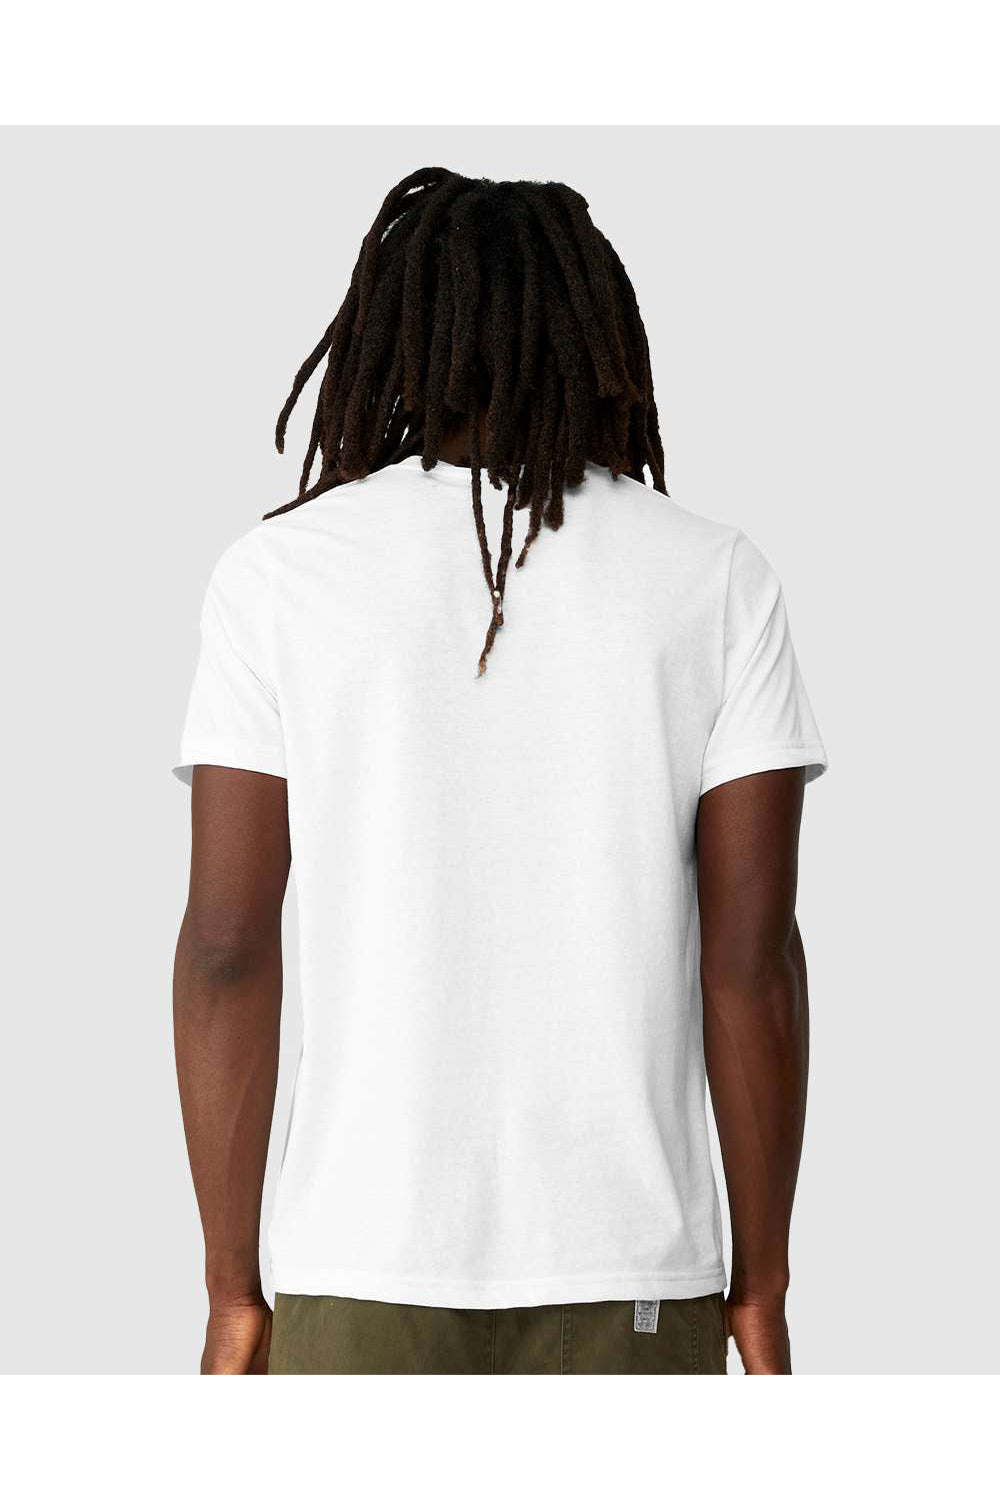 Bella + Canvas 3001ECO Mens EcoMax Short Sleeve Crewneck T-Shirt White Model Back